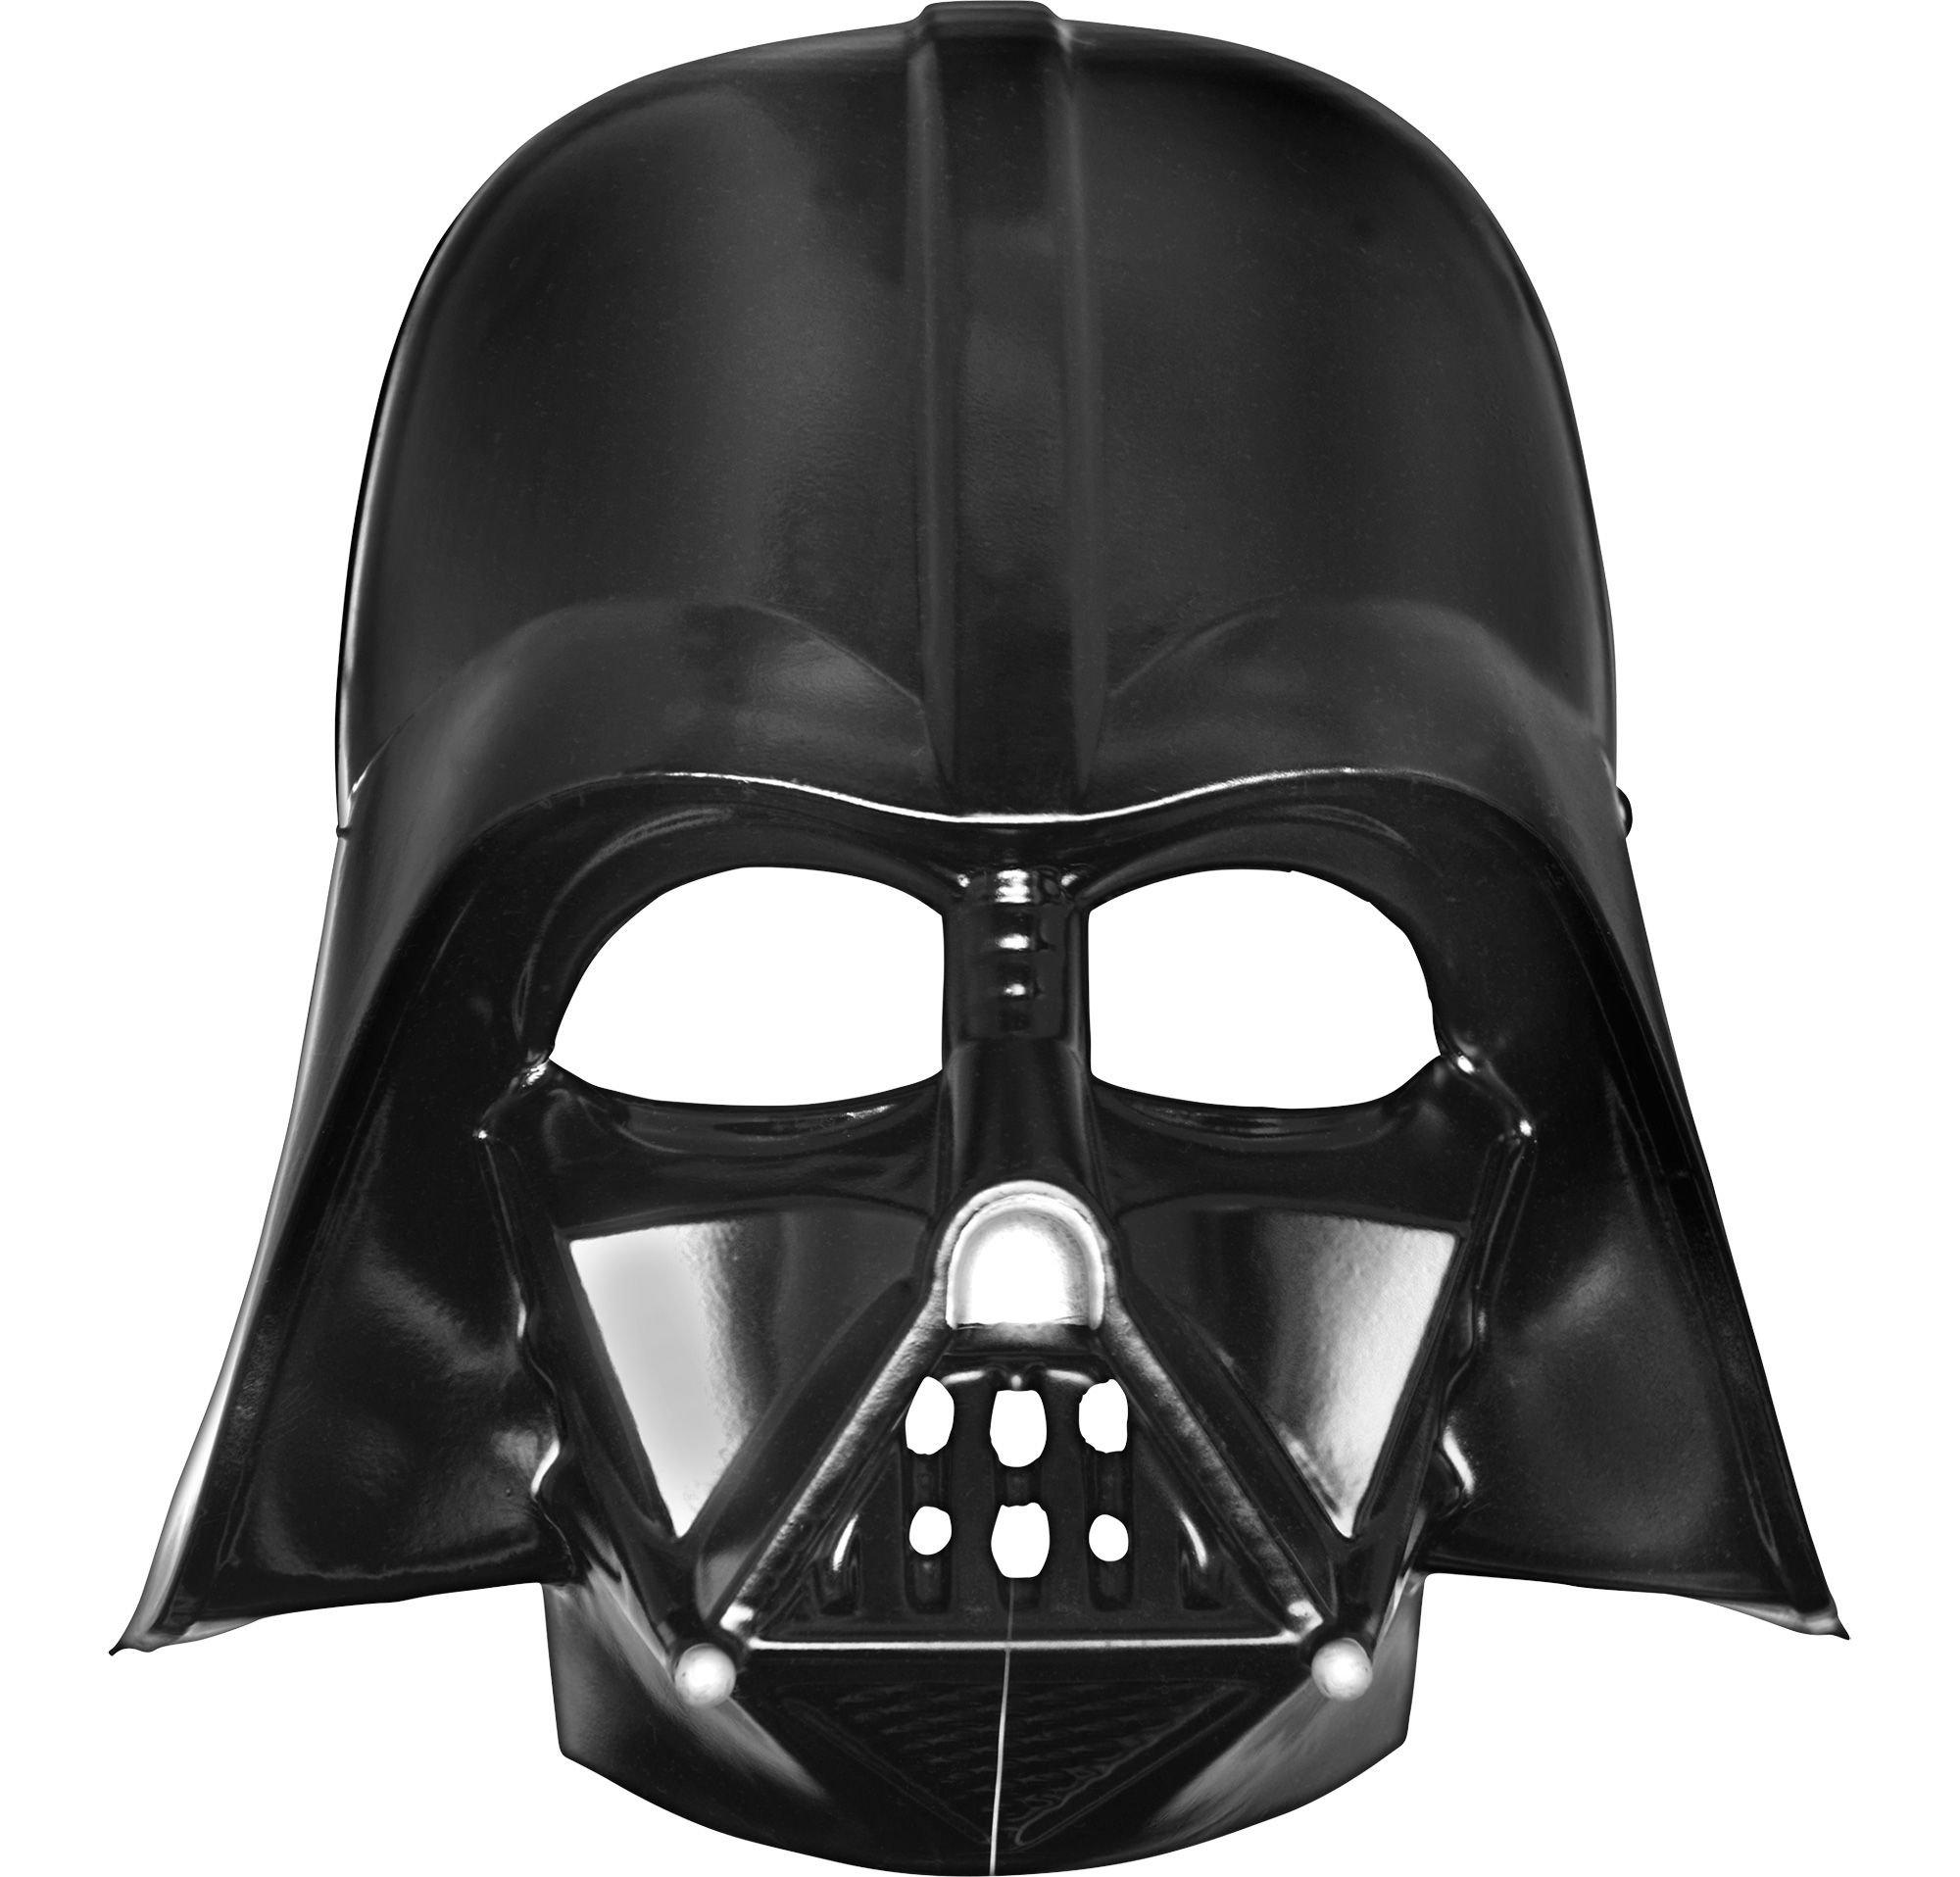 Darth Vader Mask - Star Wars